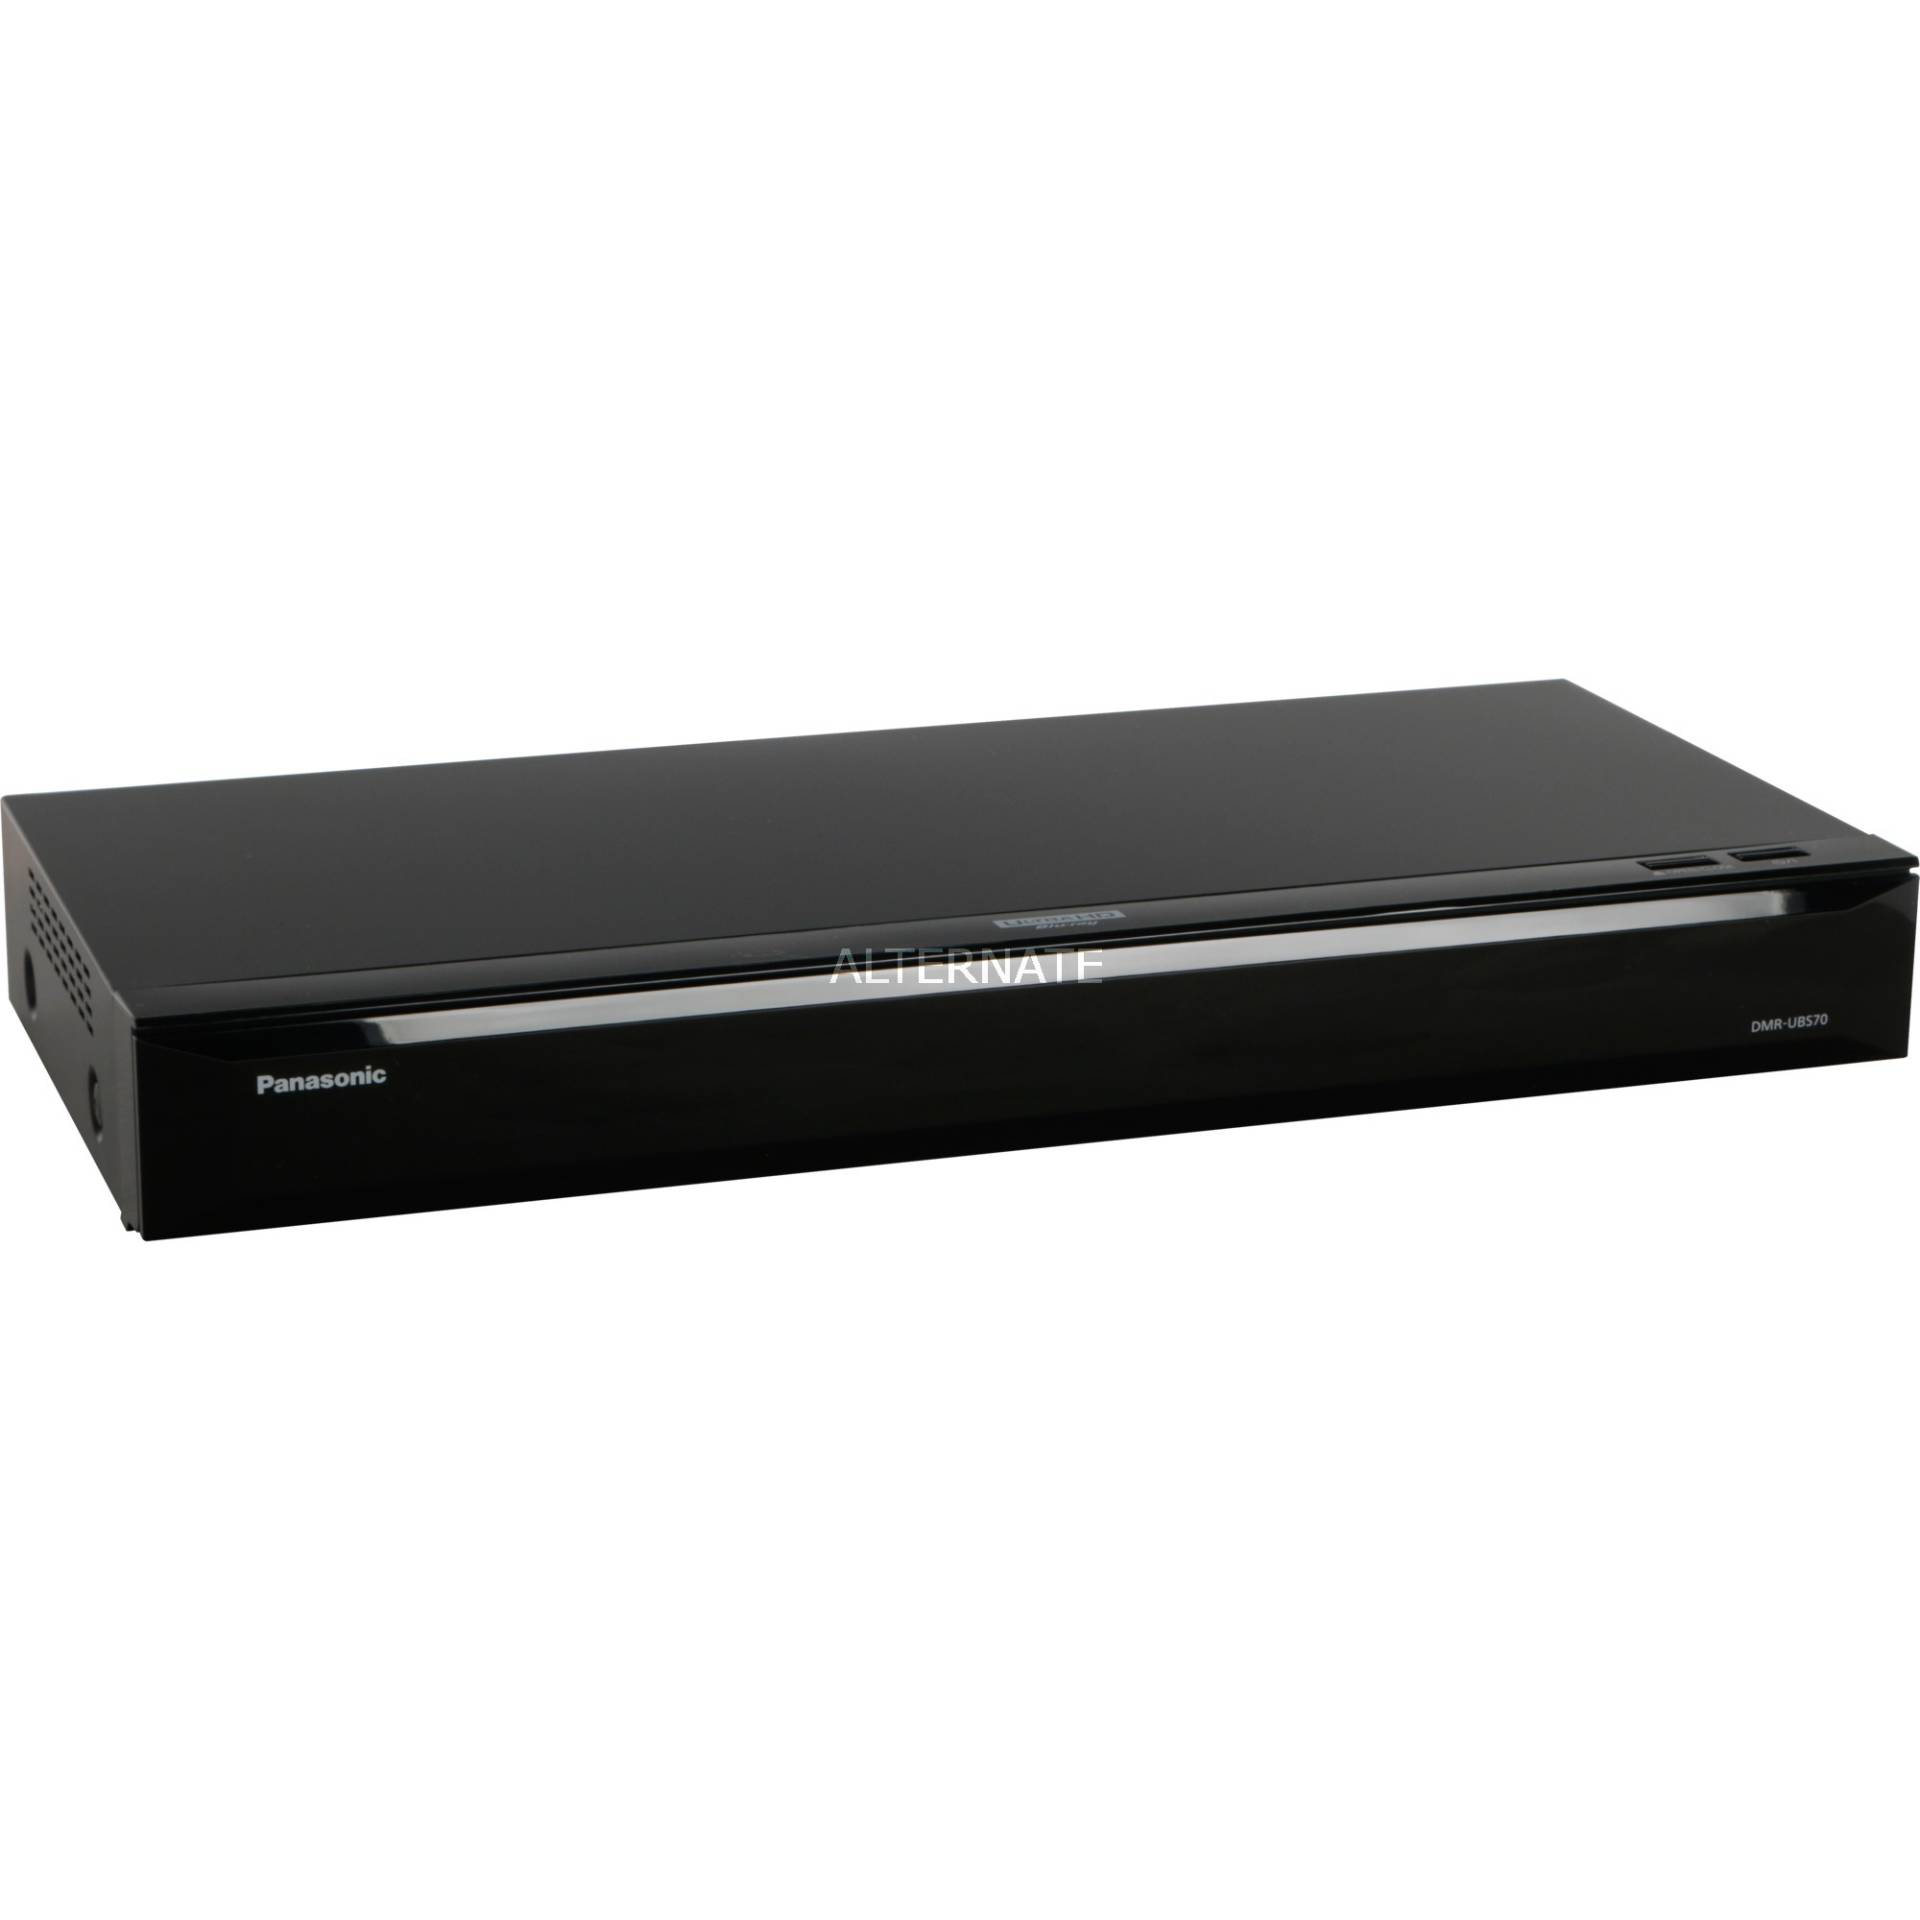 DMR-UBS70EGK, Blu-ray-Player von Panasonic